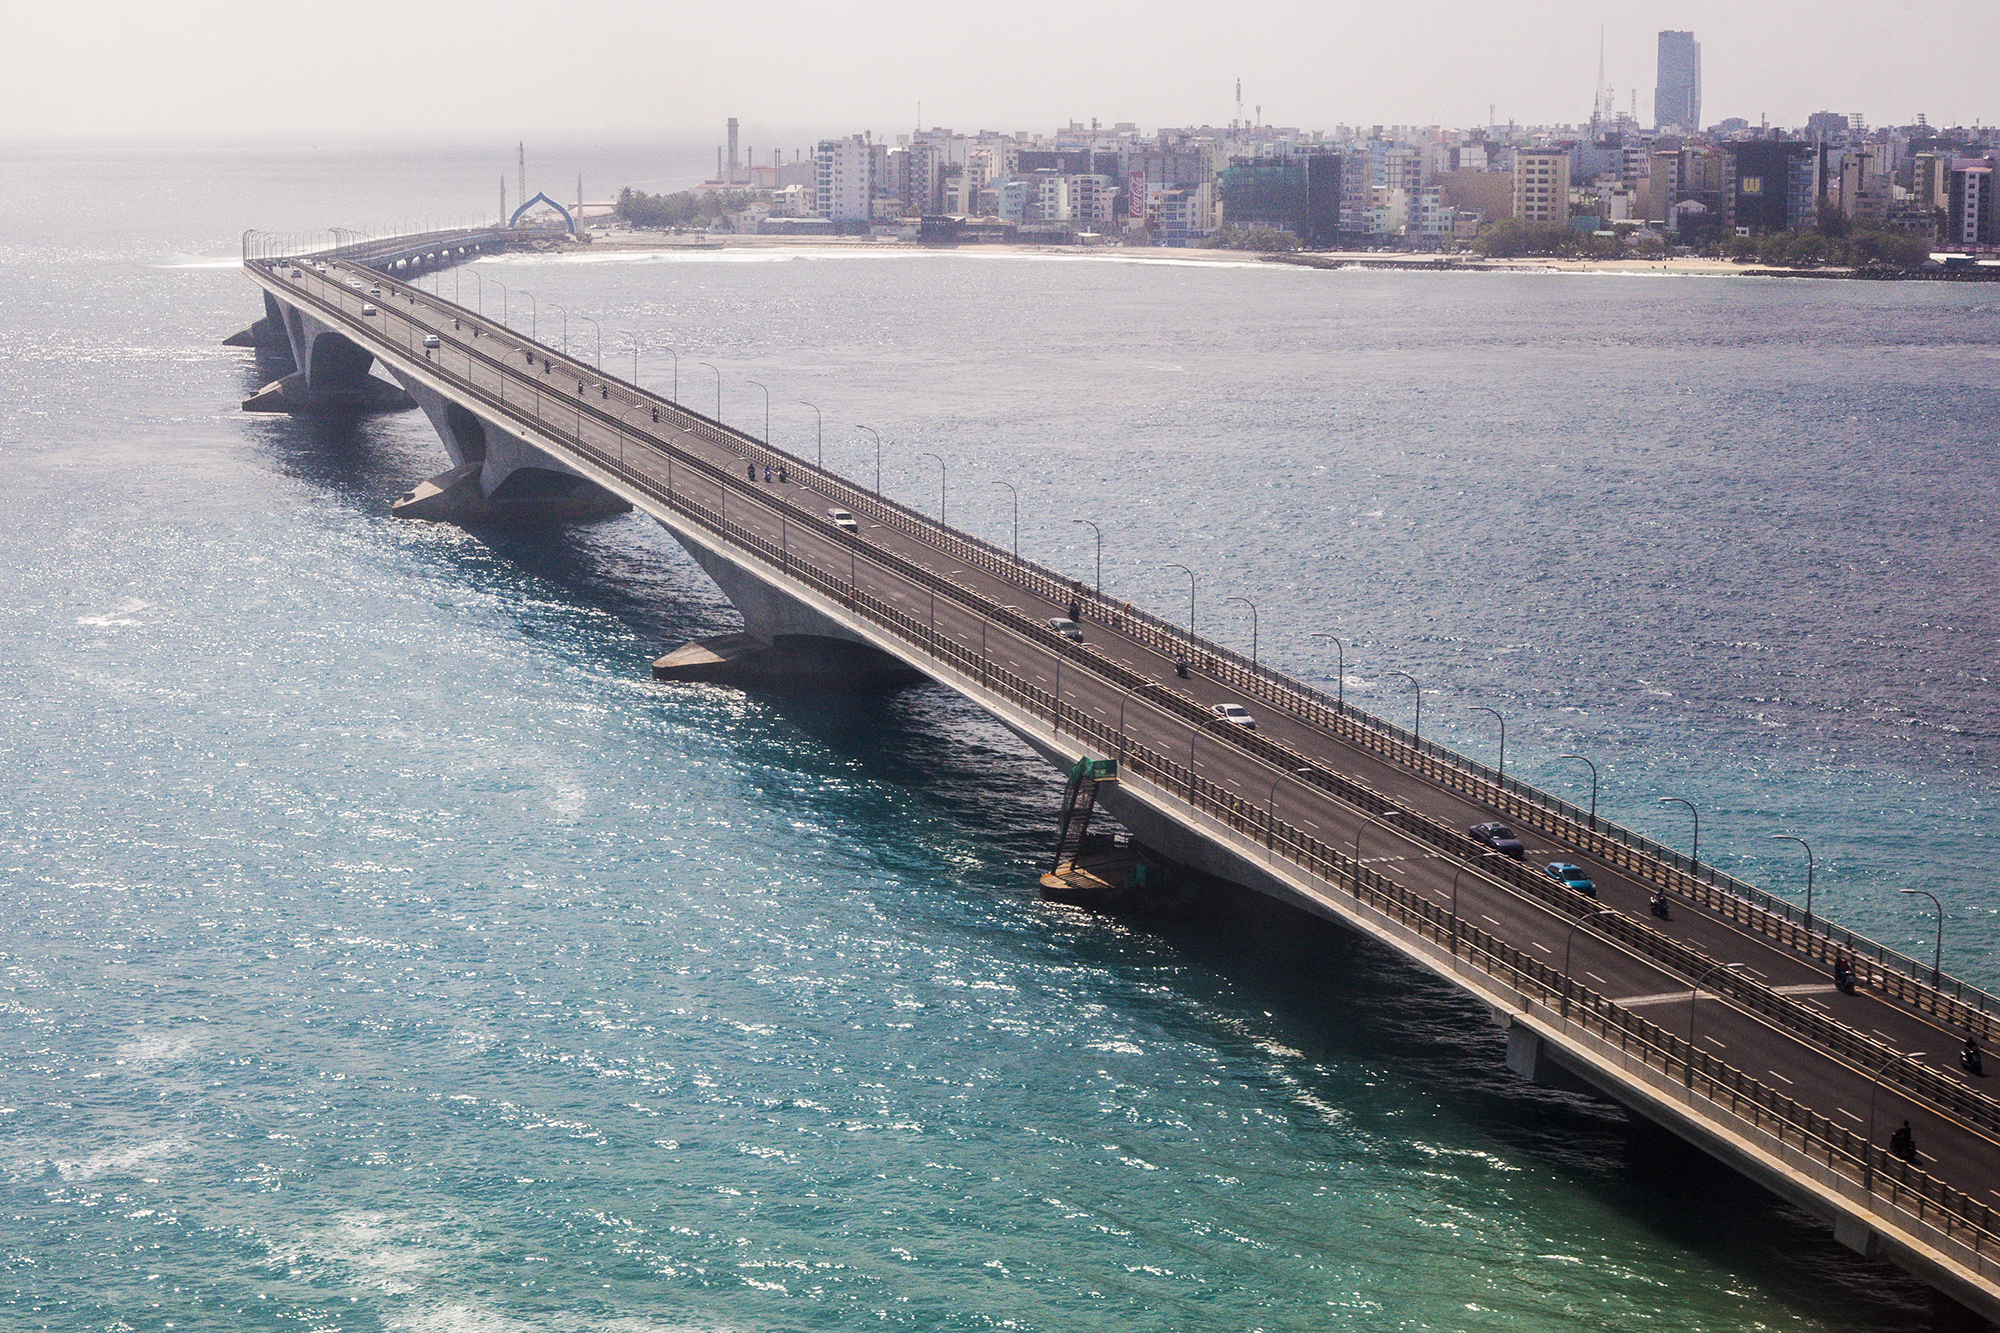 Malé Bridge